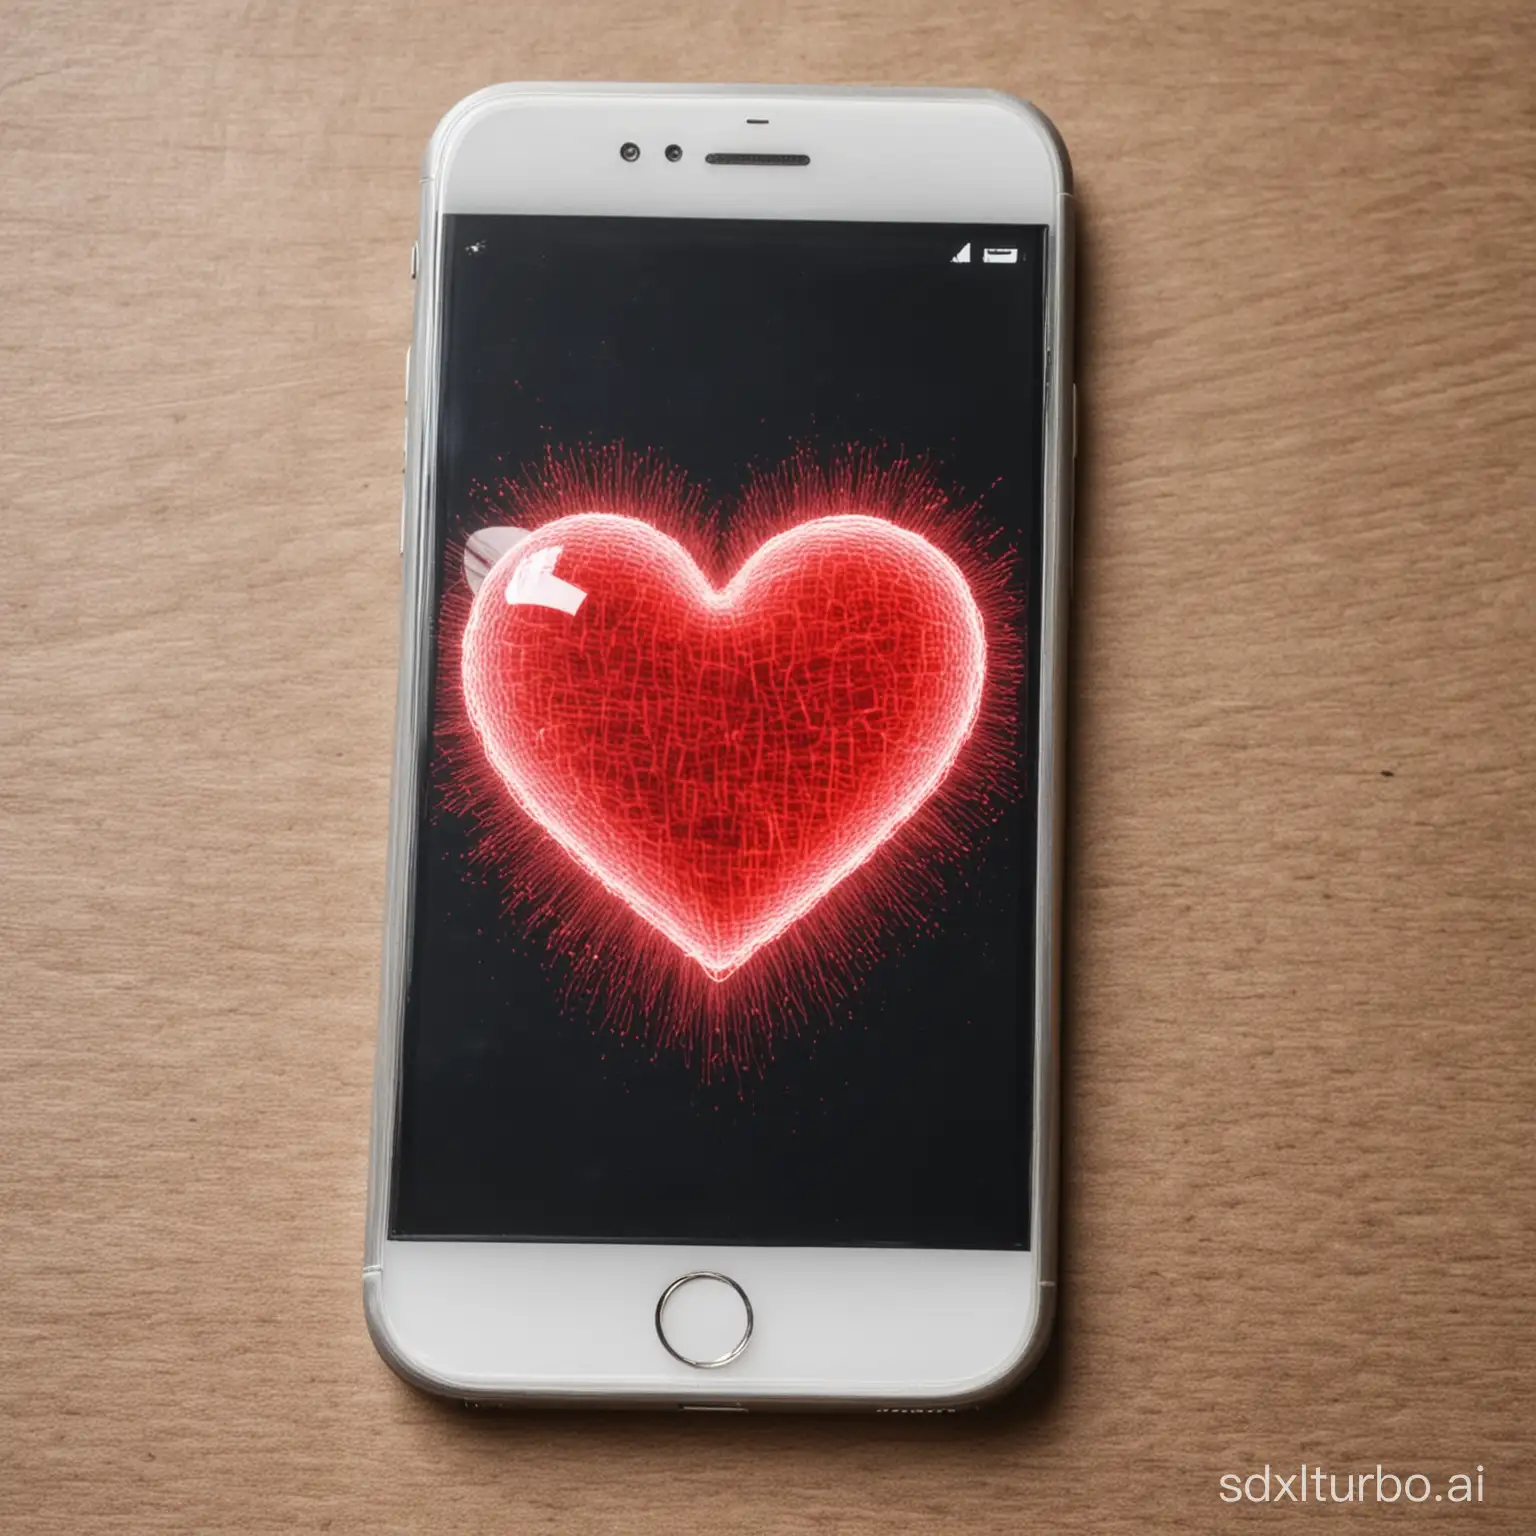 Love-Symbol-on-Smartphone-Display